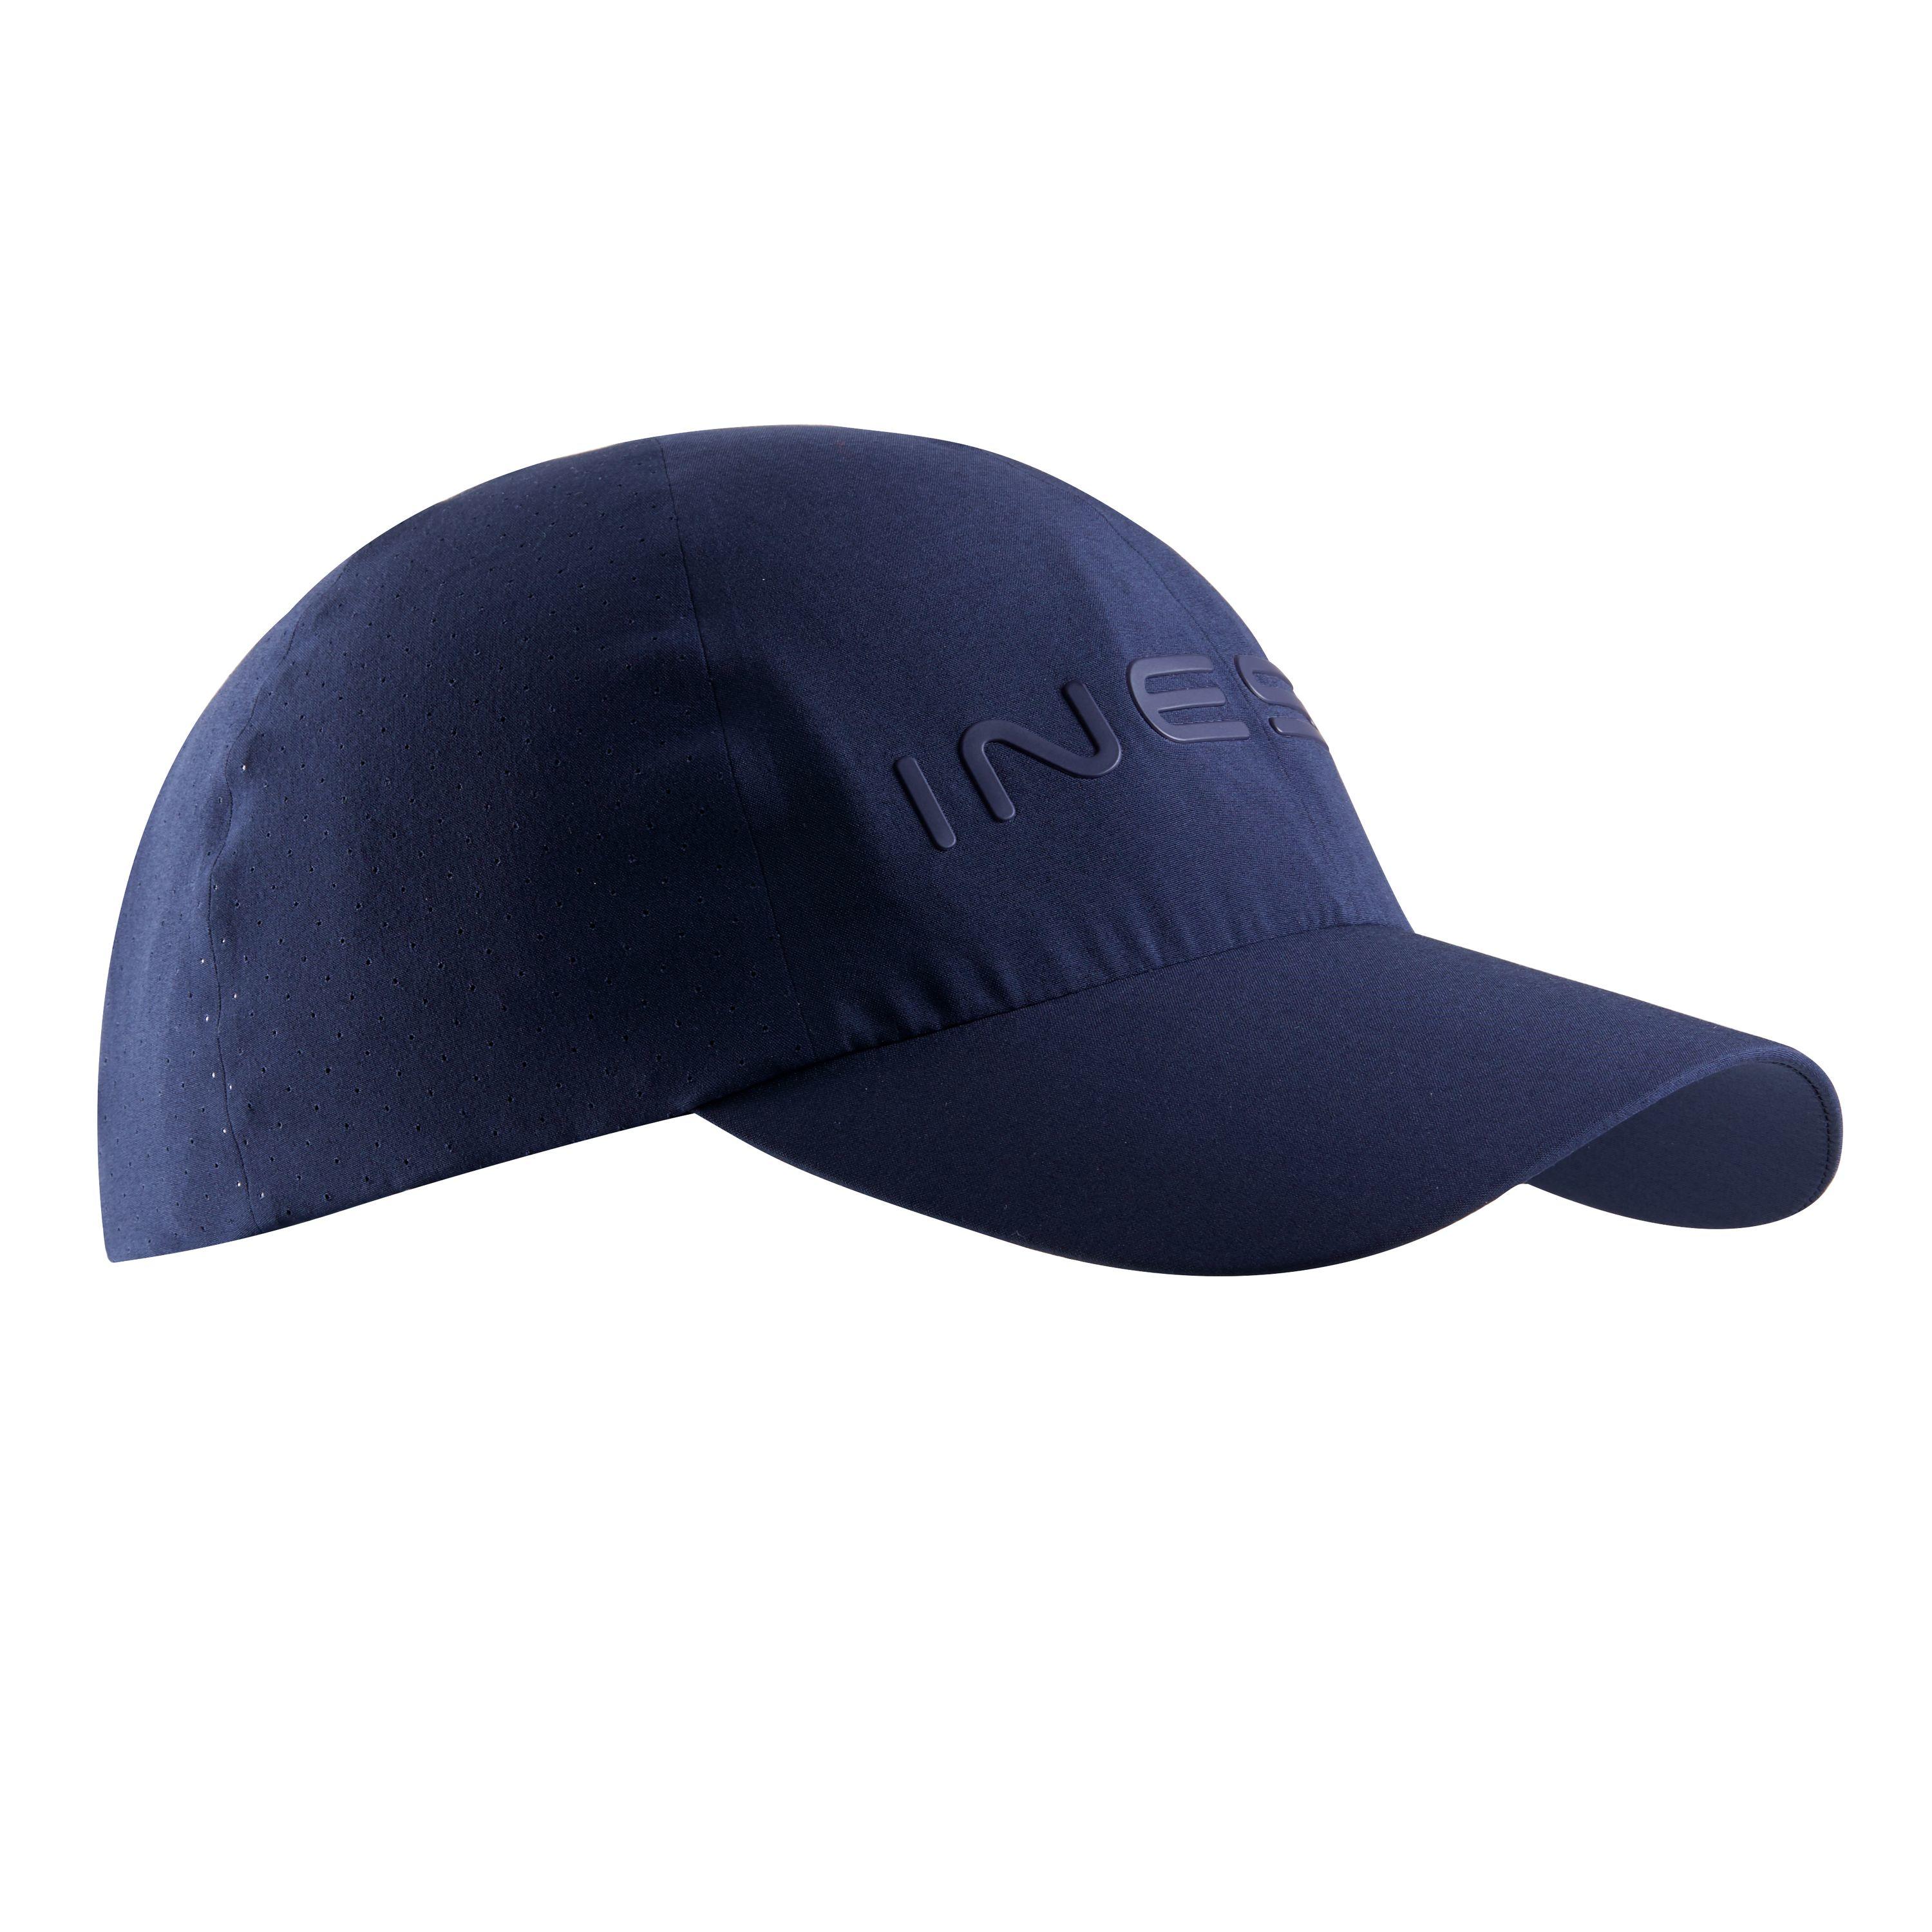 casquette de golf enfant mw500 bleu marine - inesis